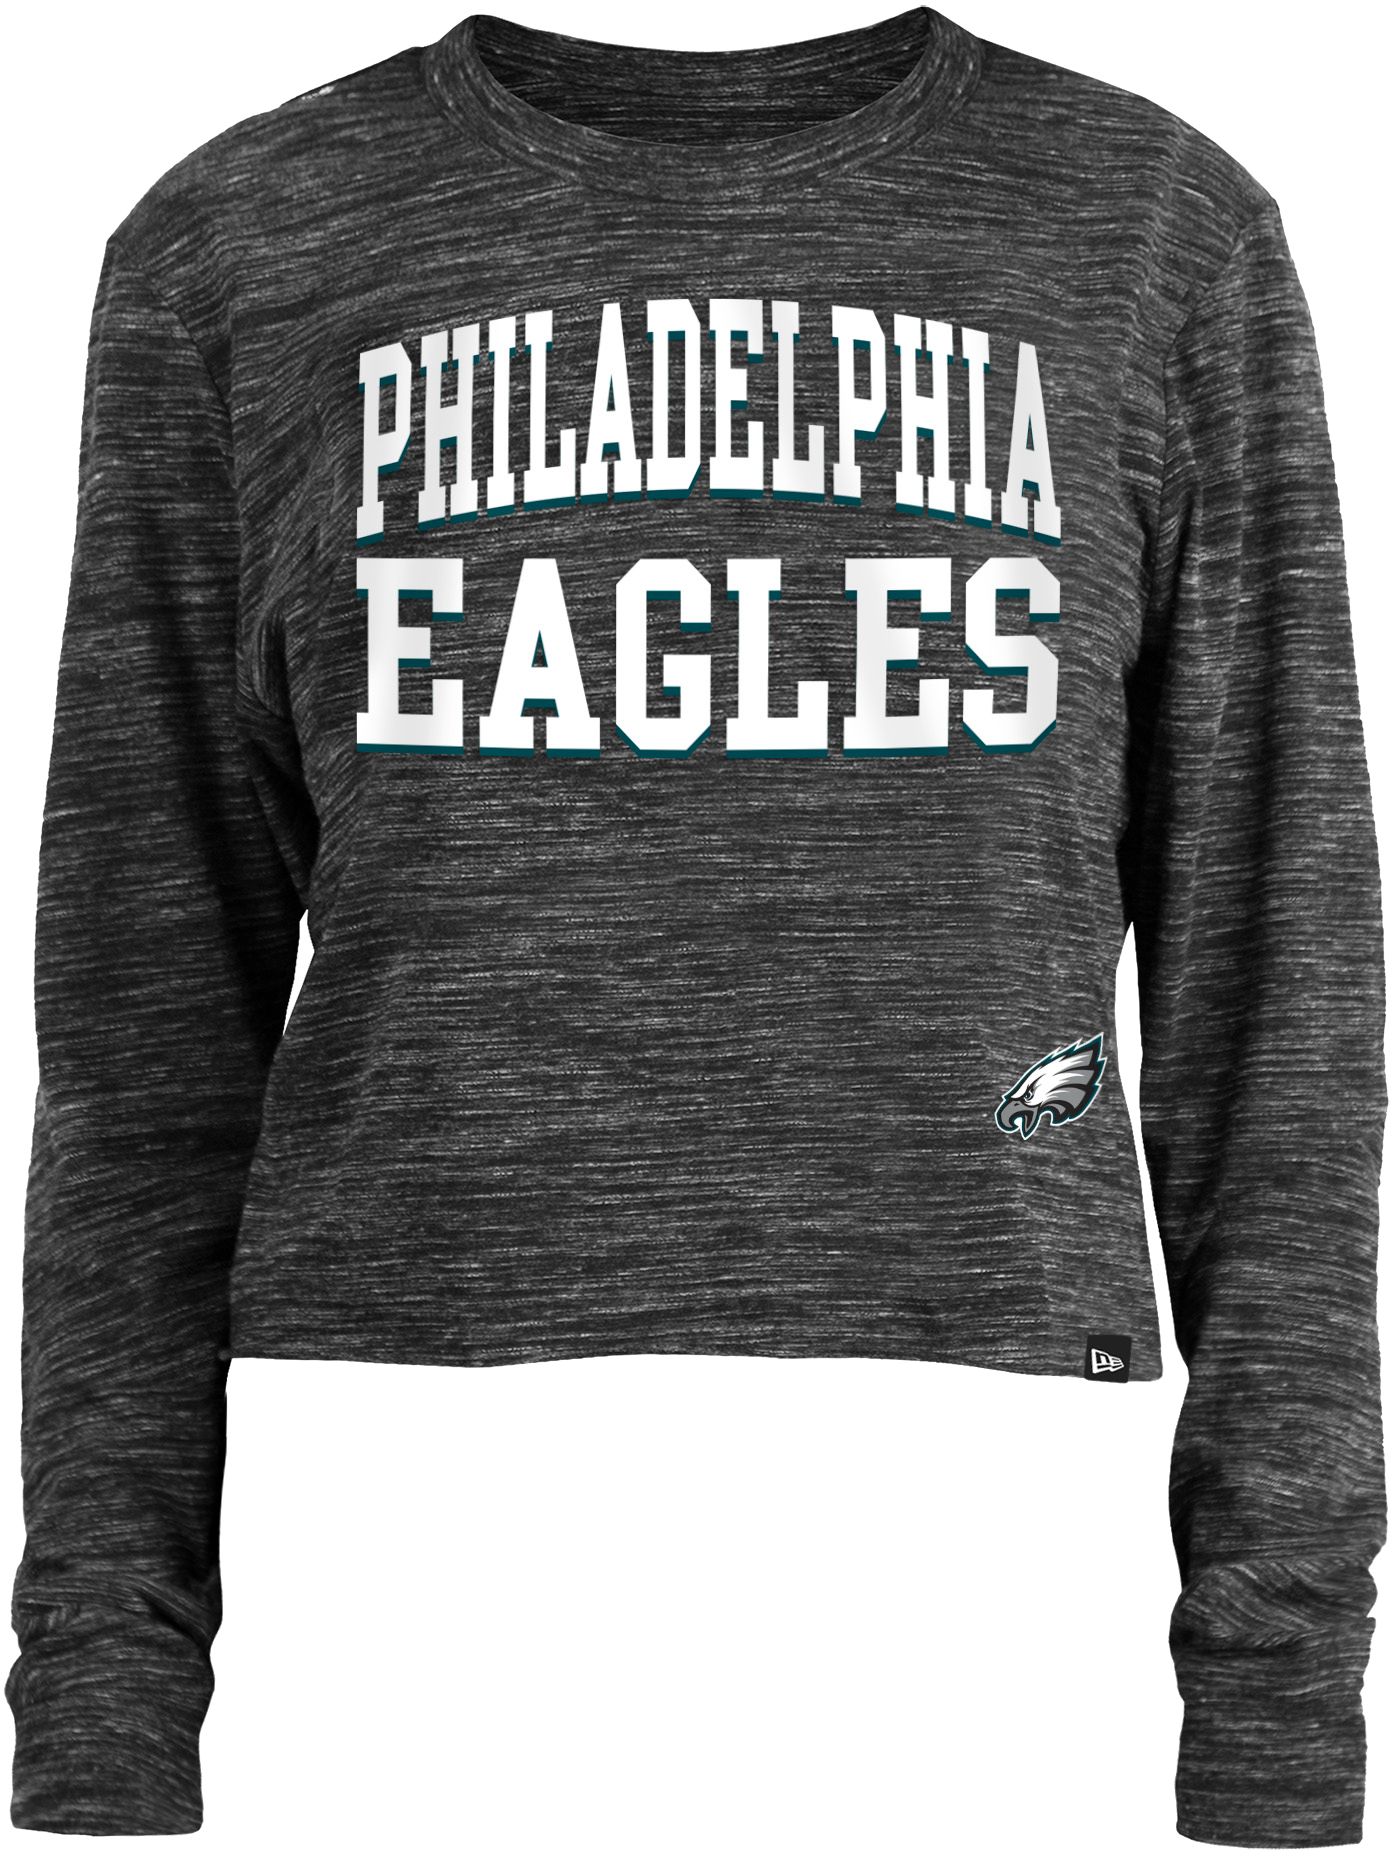 women's philadelphia eagles sweatshirt